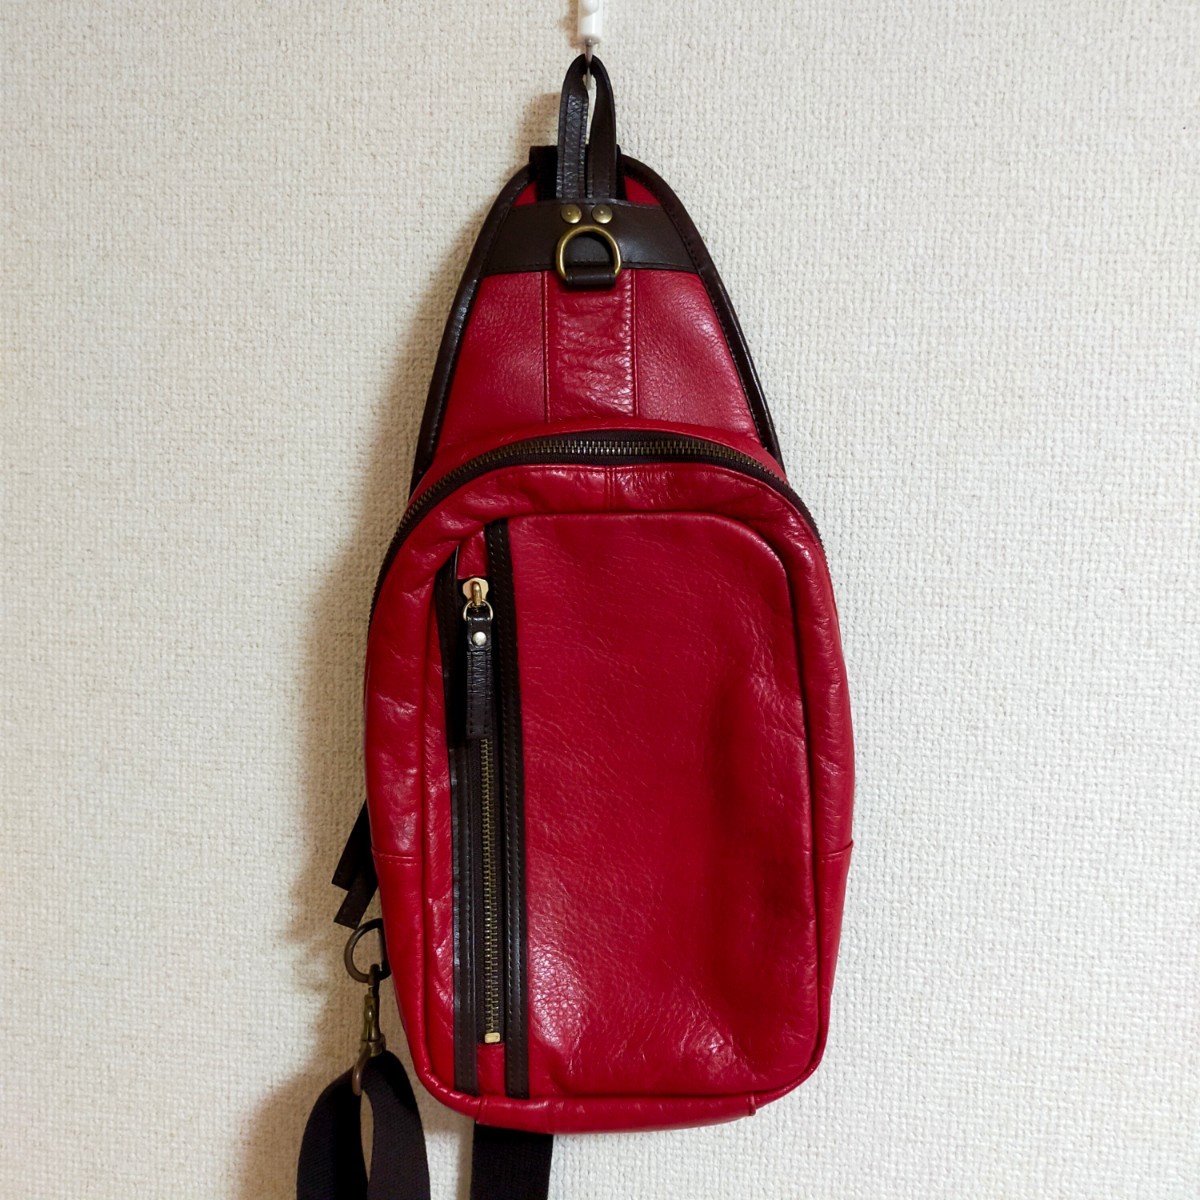 SPREAD スプレッド 豊岡鞄 レザー ボディバッグ ワンショルダーバッグ 鞄 かばん 日本製 レッド（赤） 斜め掛け 本革 メンズバッグ